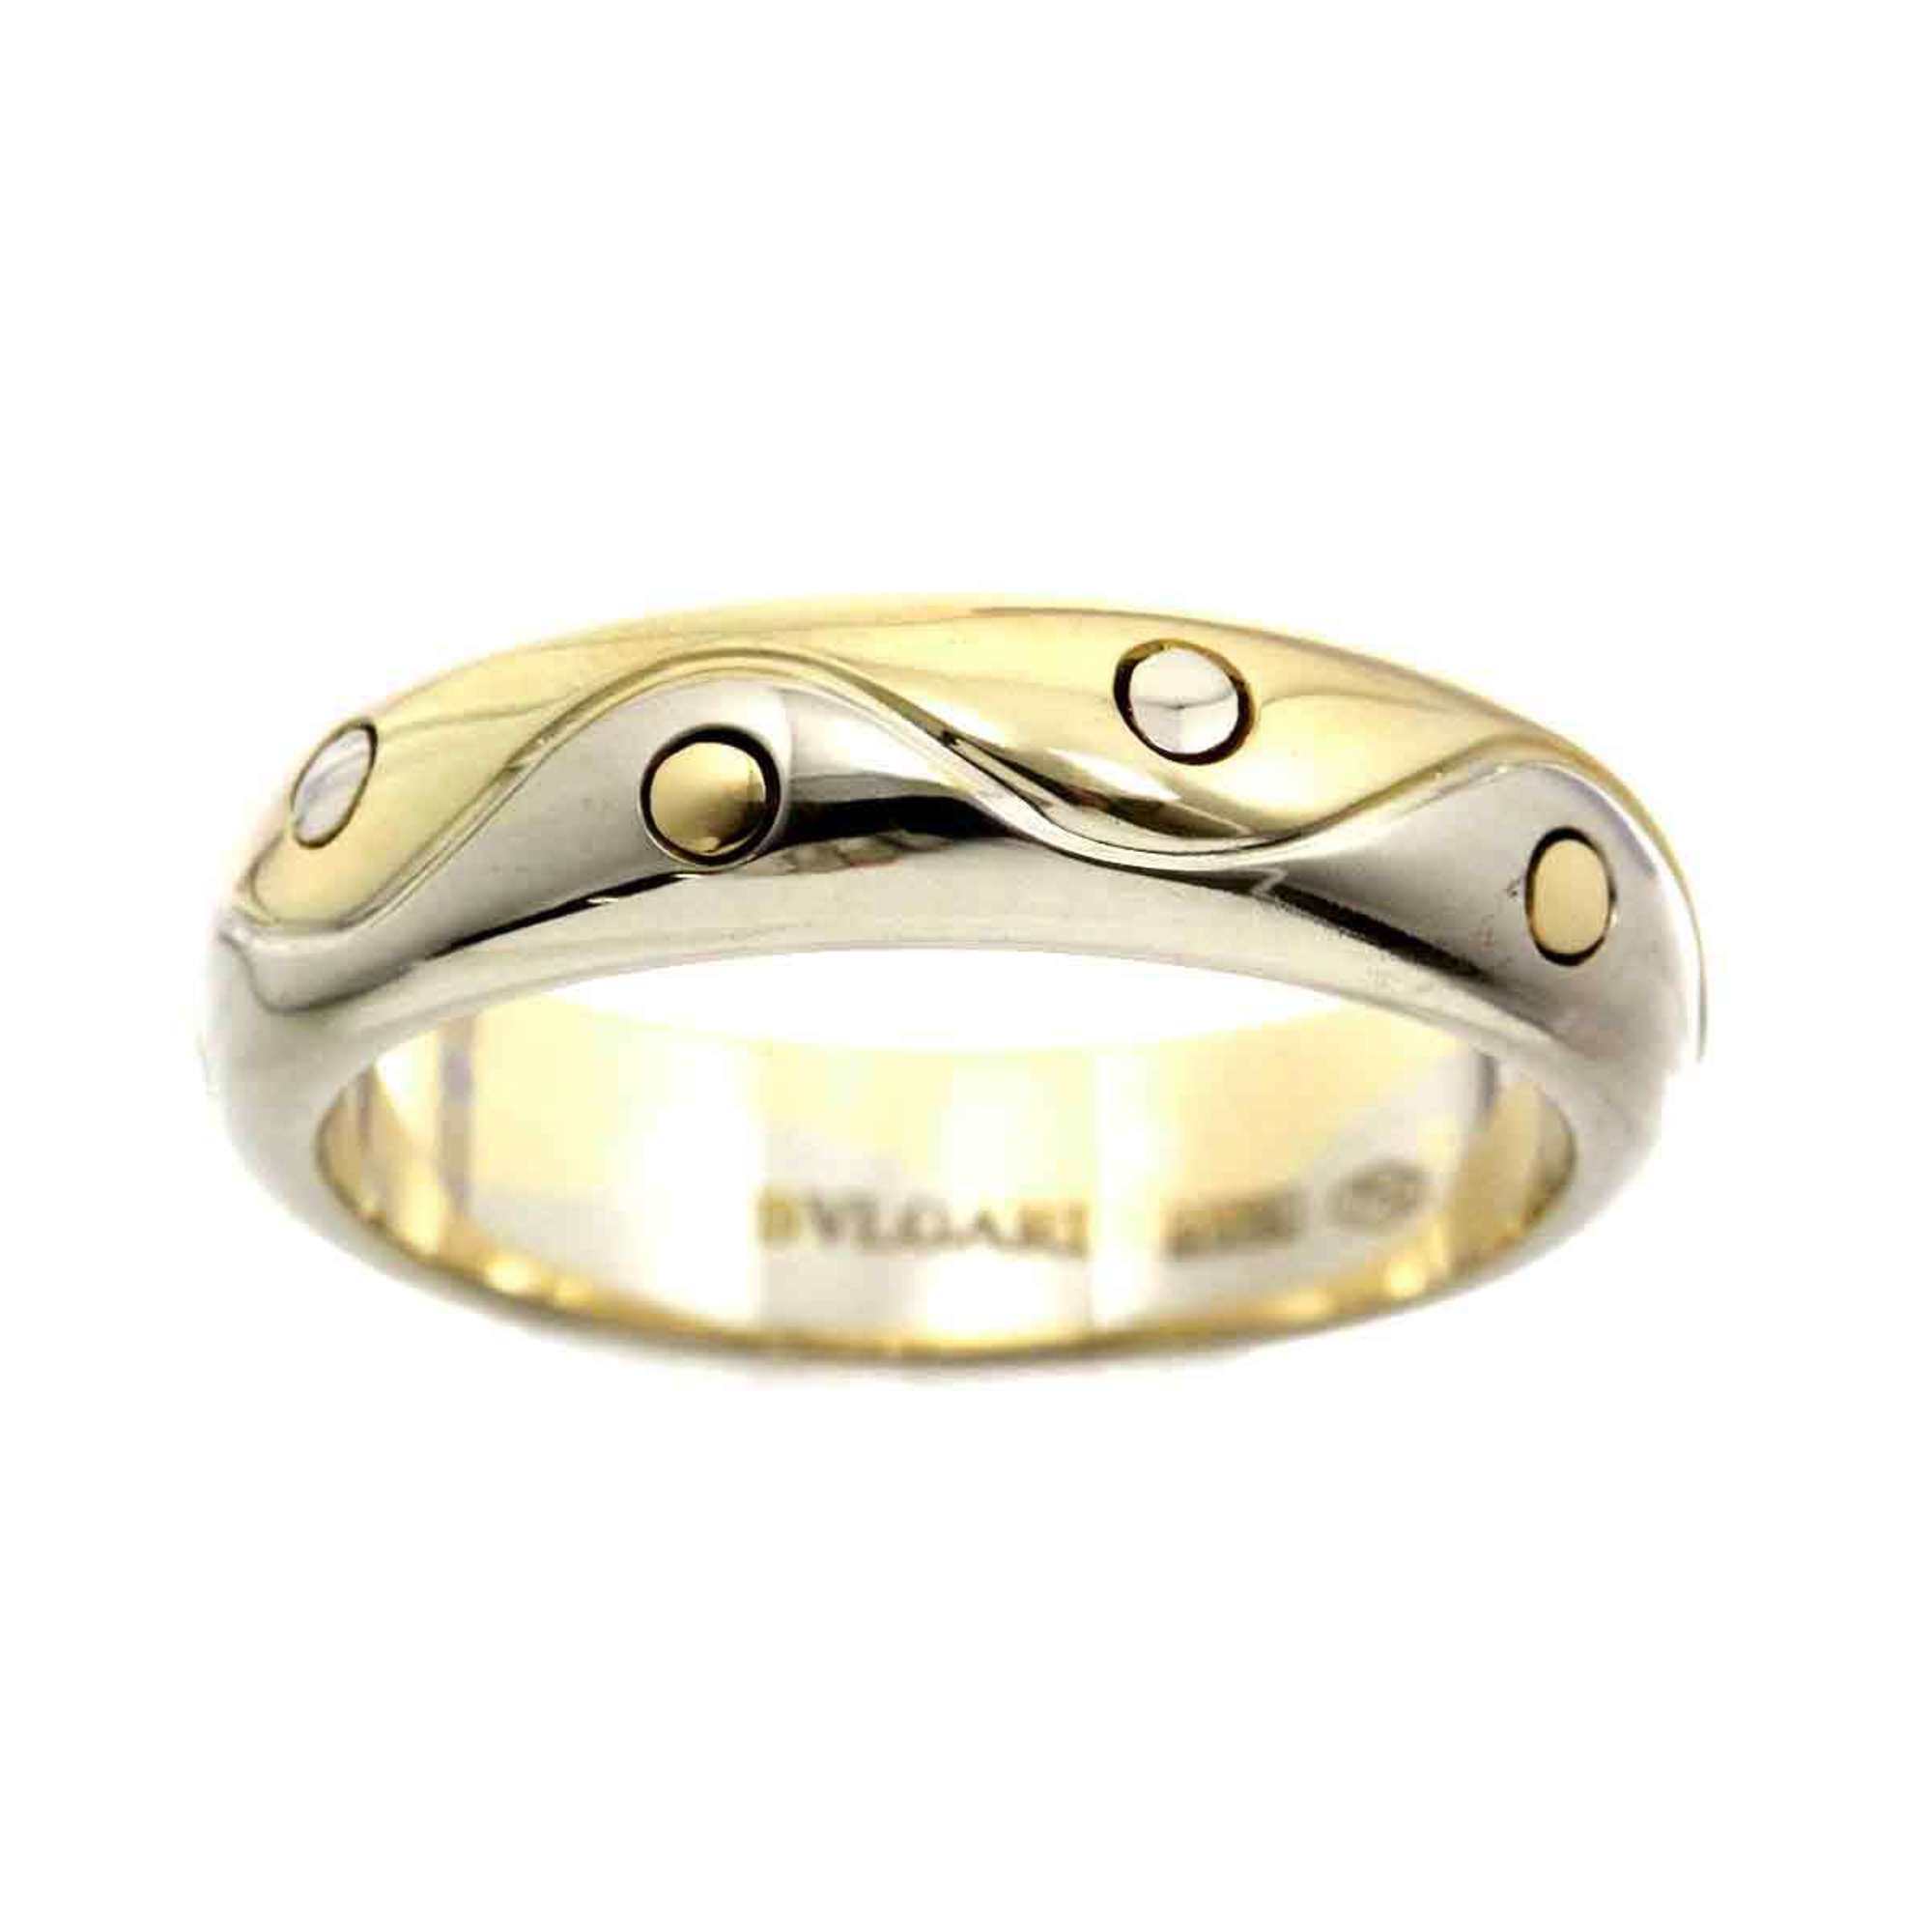 BVLGARI Onda Ring, size 12, K18, YG, WG, yellow and white gold, 750, combination wave ring, Ring